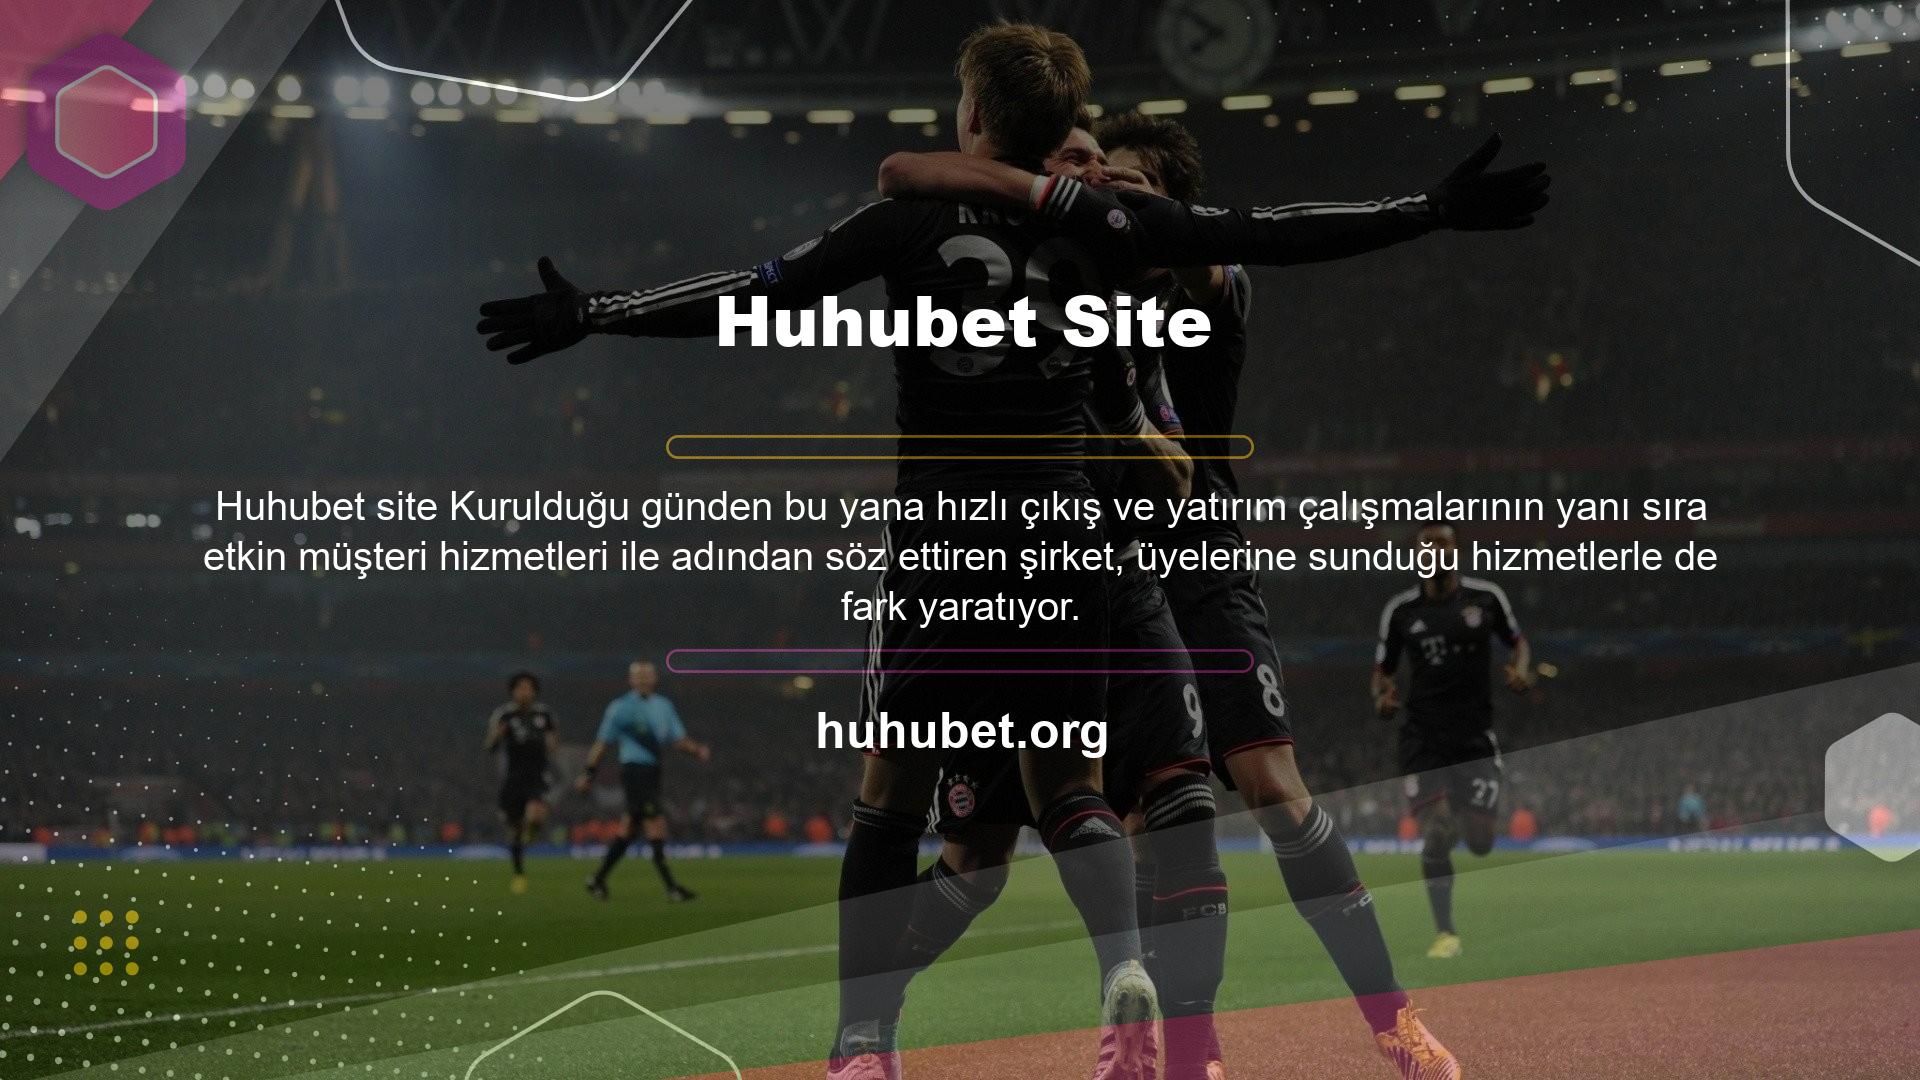 Huhubet site